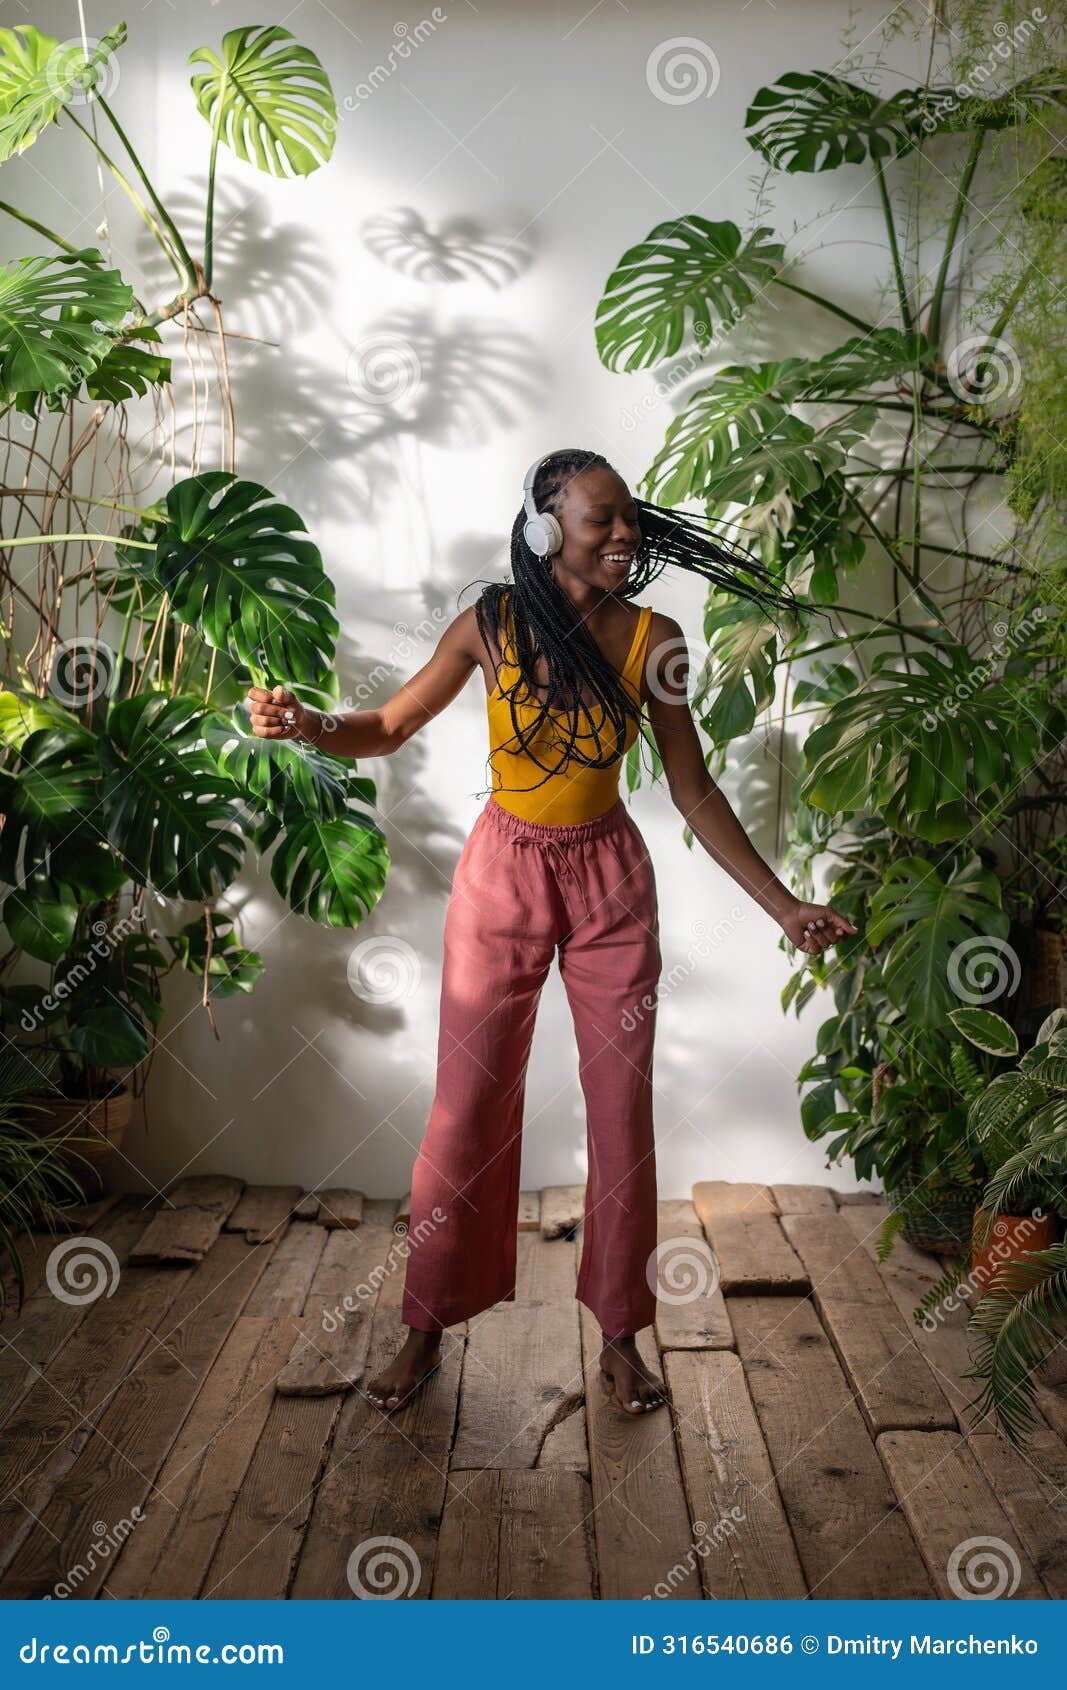 positive black girl dancing barefoot on wooden floor in headphones listening to music enjoy moment.